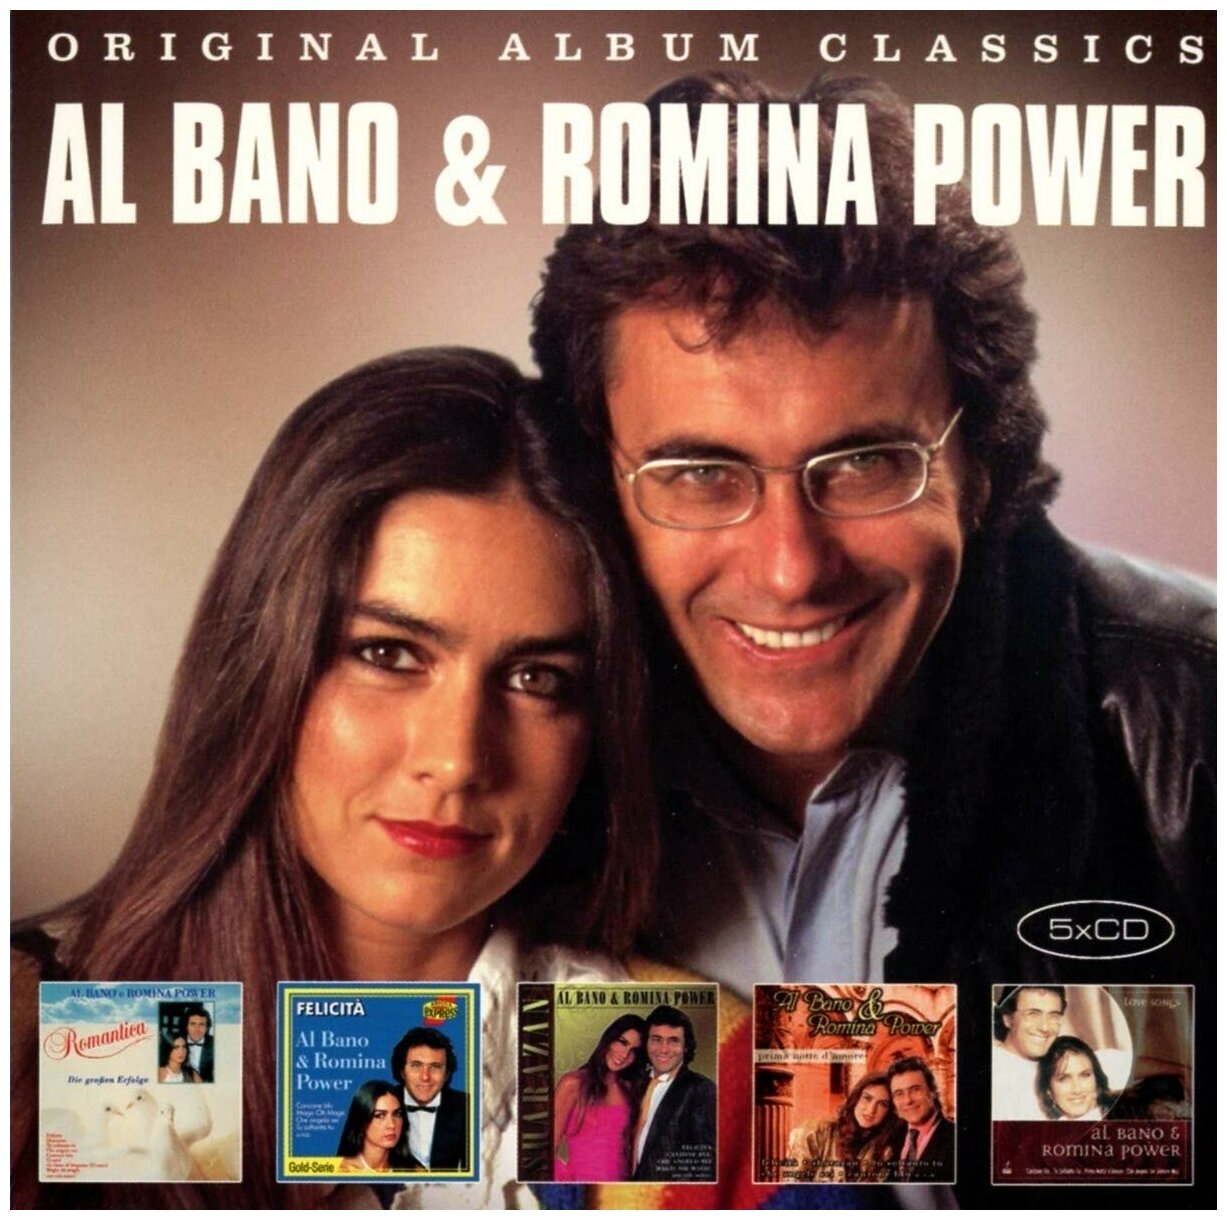 Audio CD Al Bano Romina Power. Original Album Classics (5 CD)